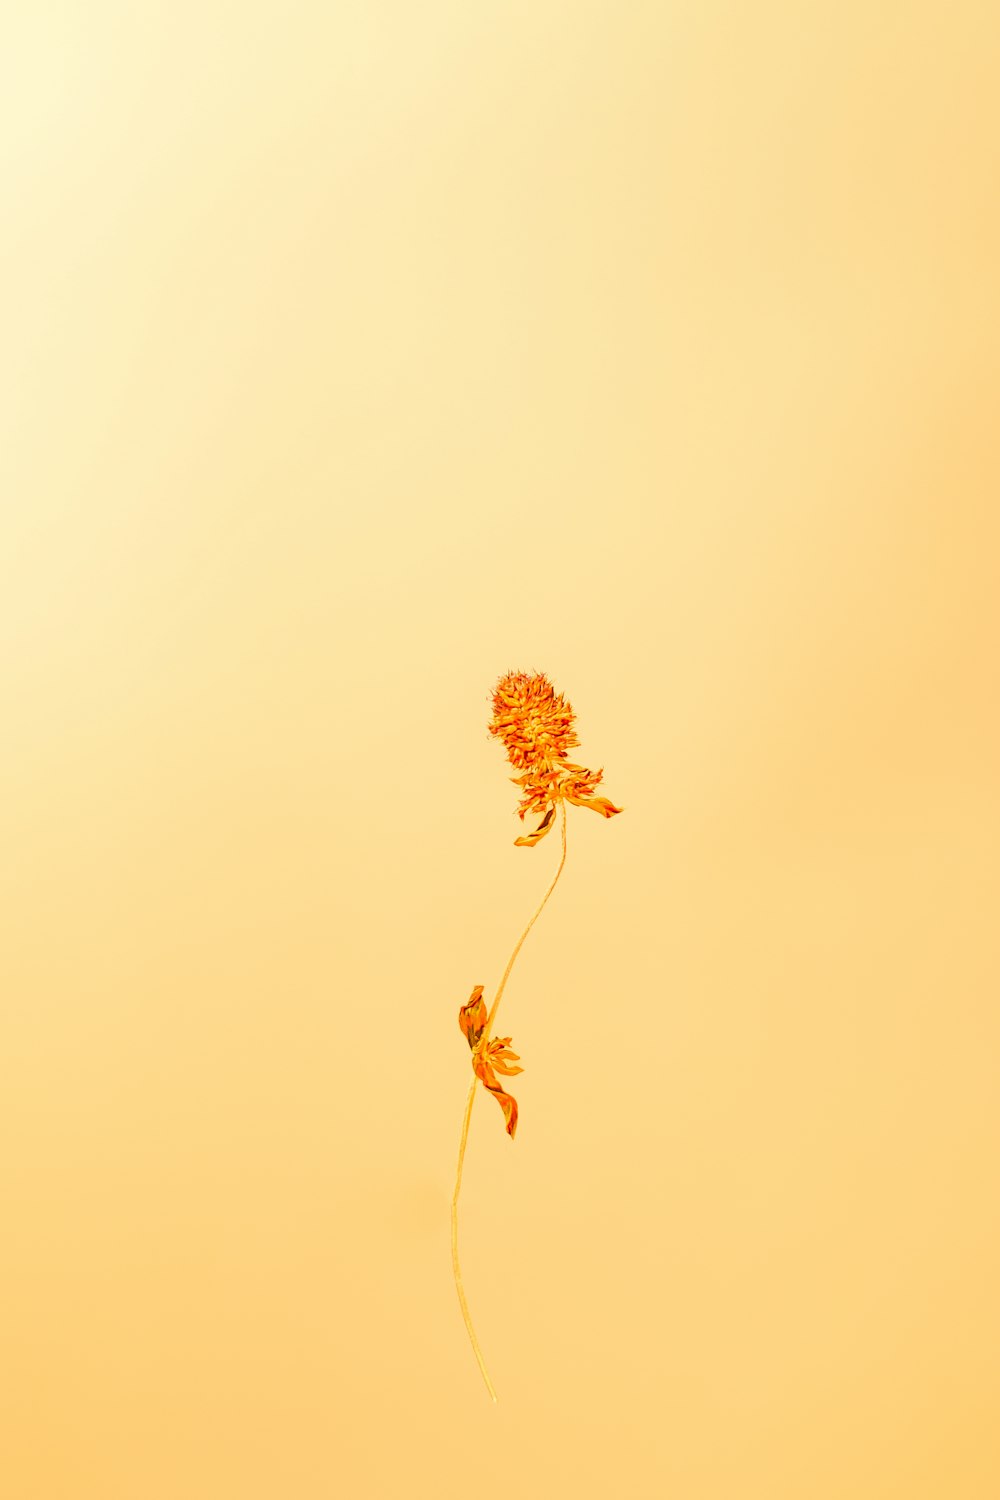 a small orange flower